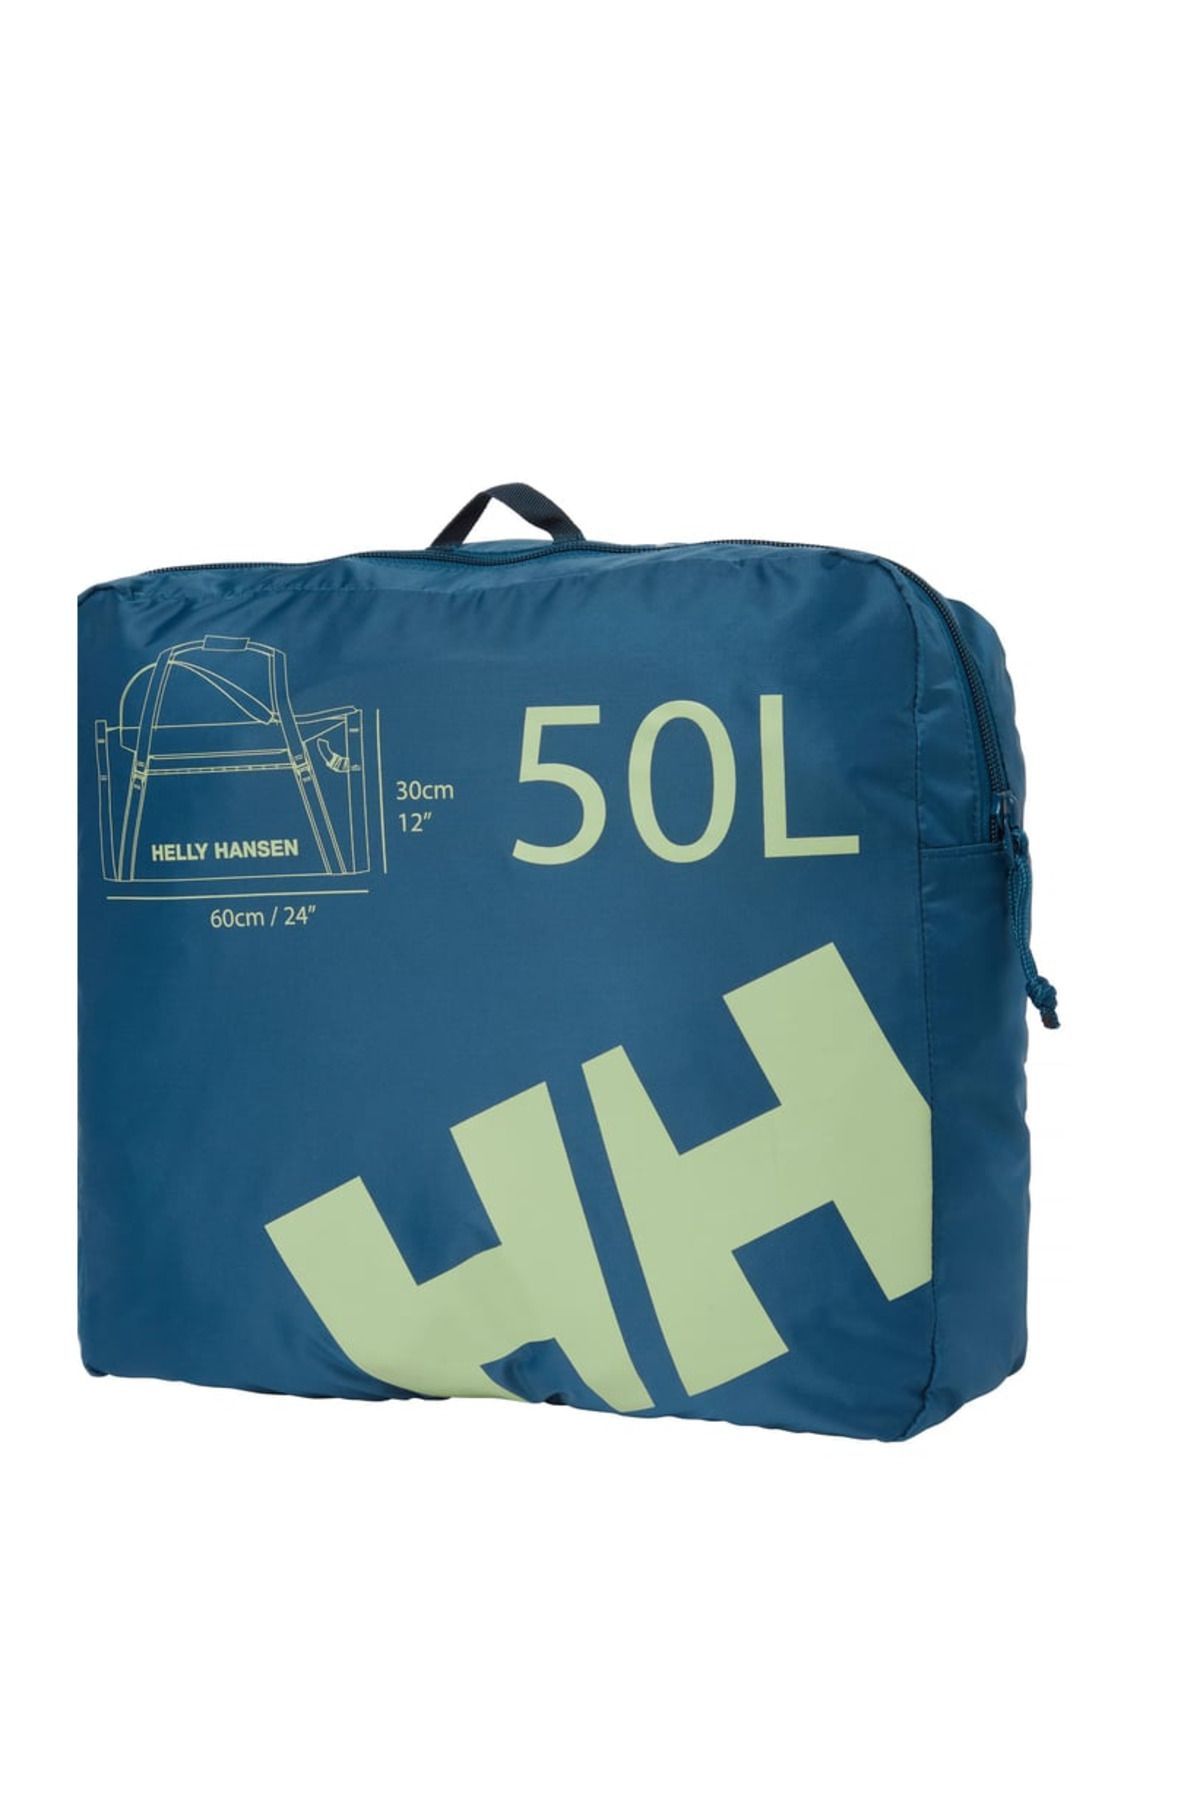 Helly Hansen DUFFEL BAG 2 50L